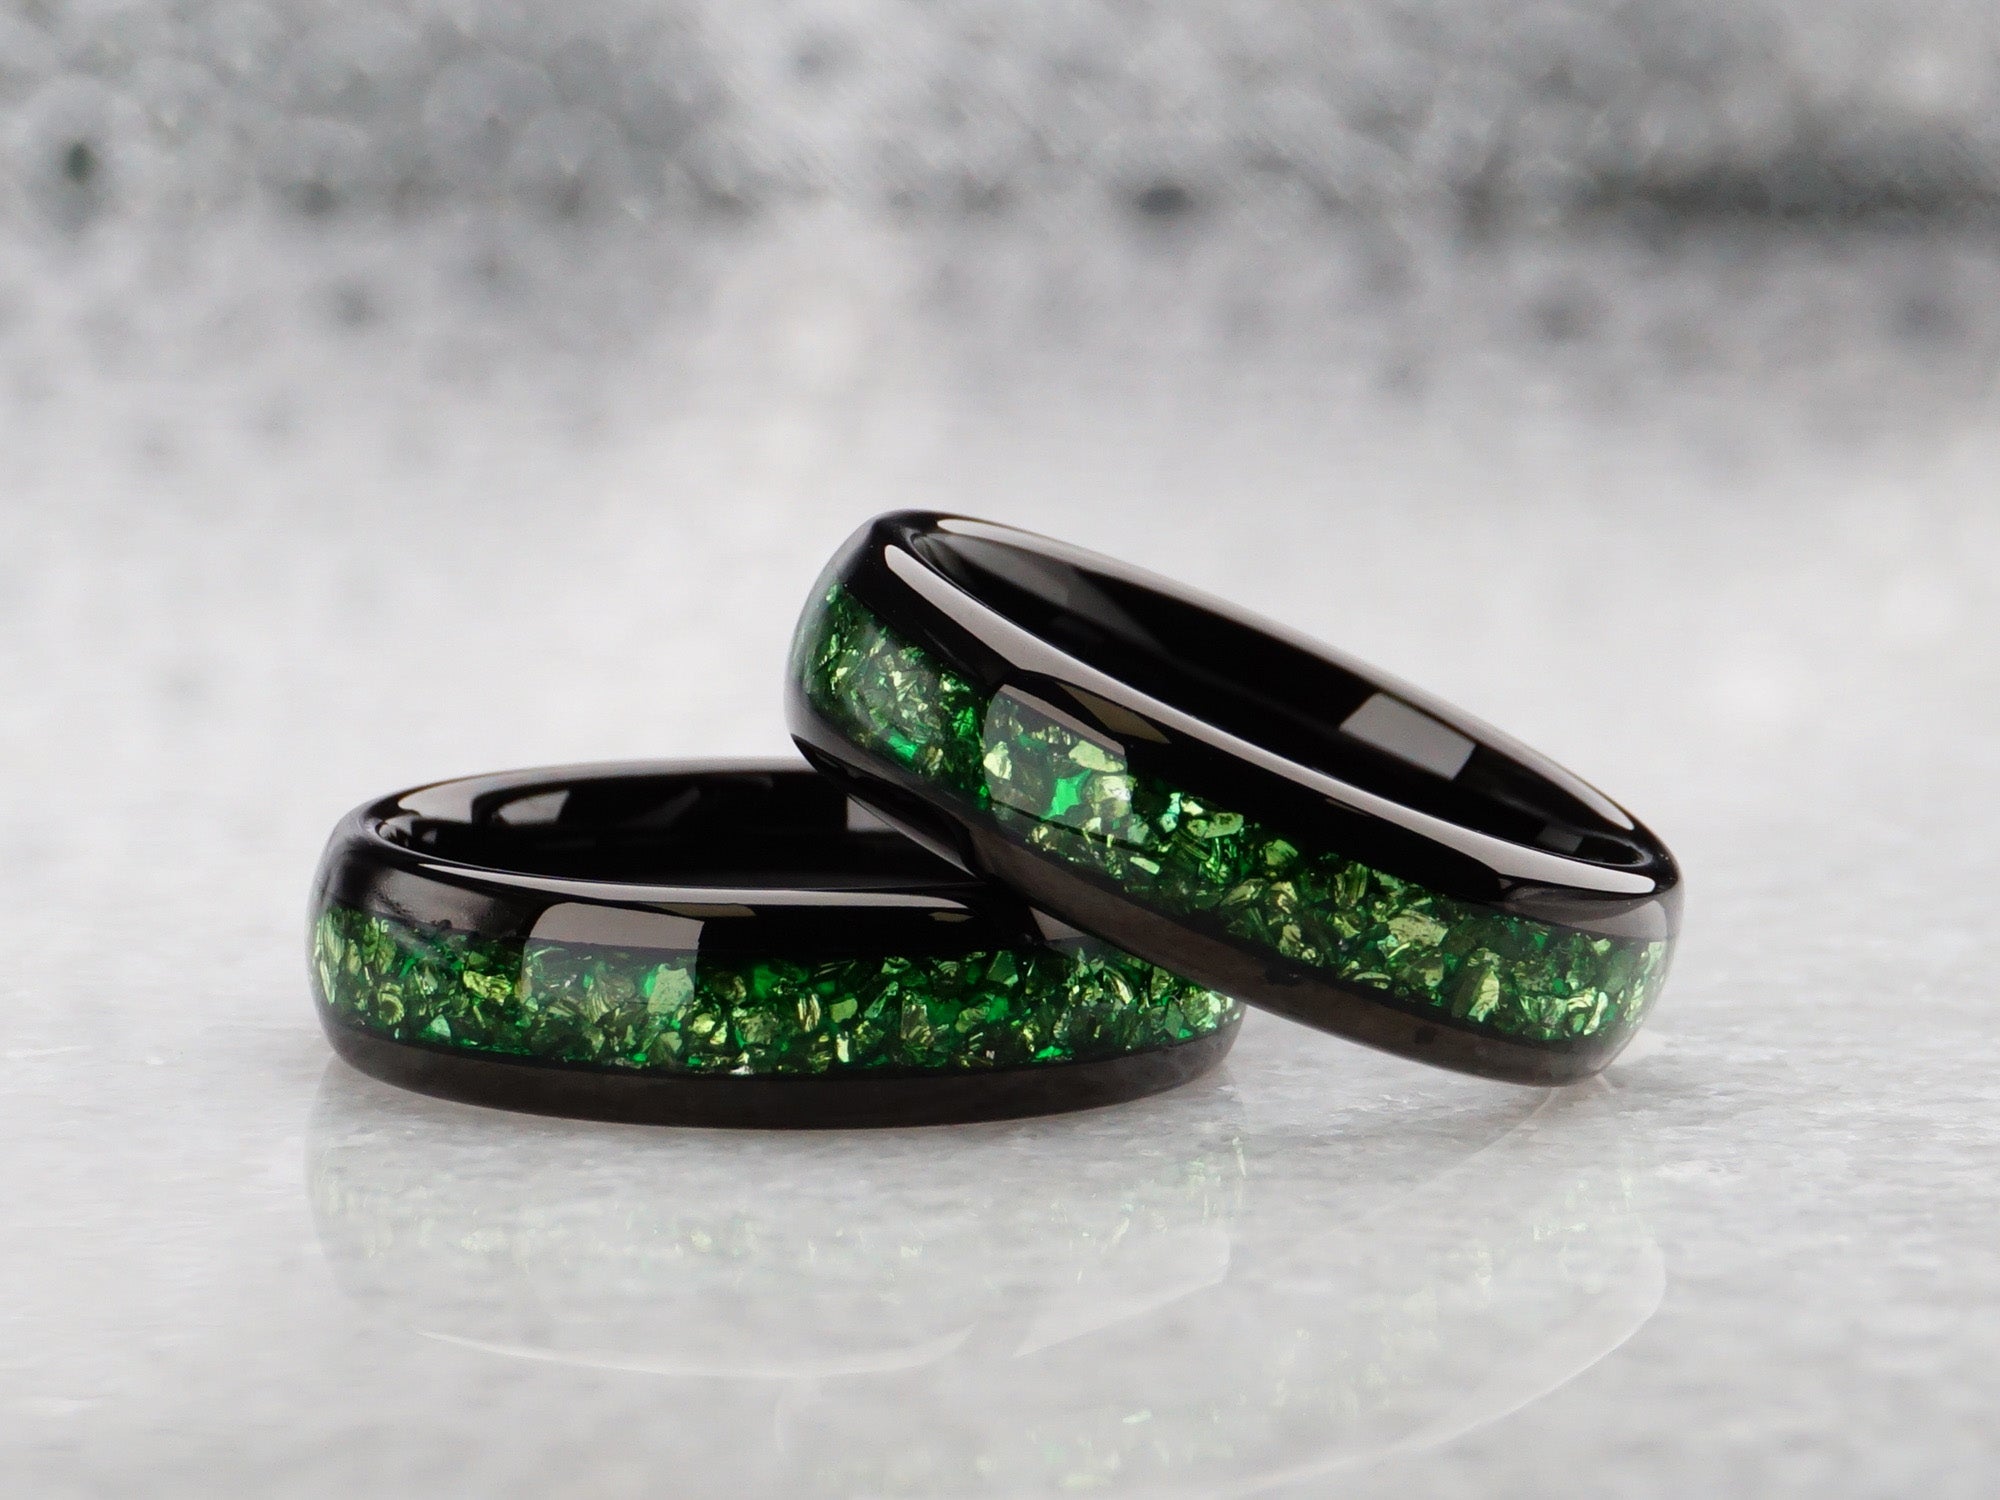 6mm green emerald ring, polished black tungsten ring with lab emerald gemstone inlay, modern mens wedding ring